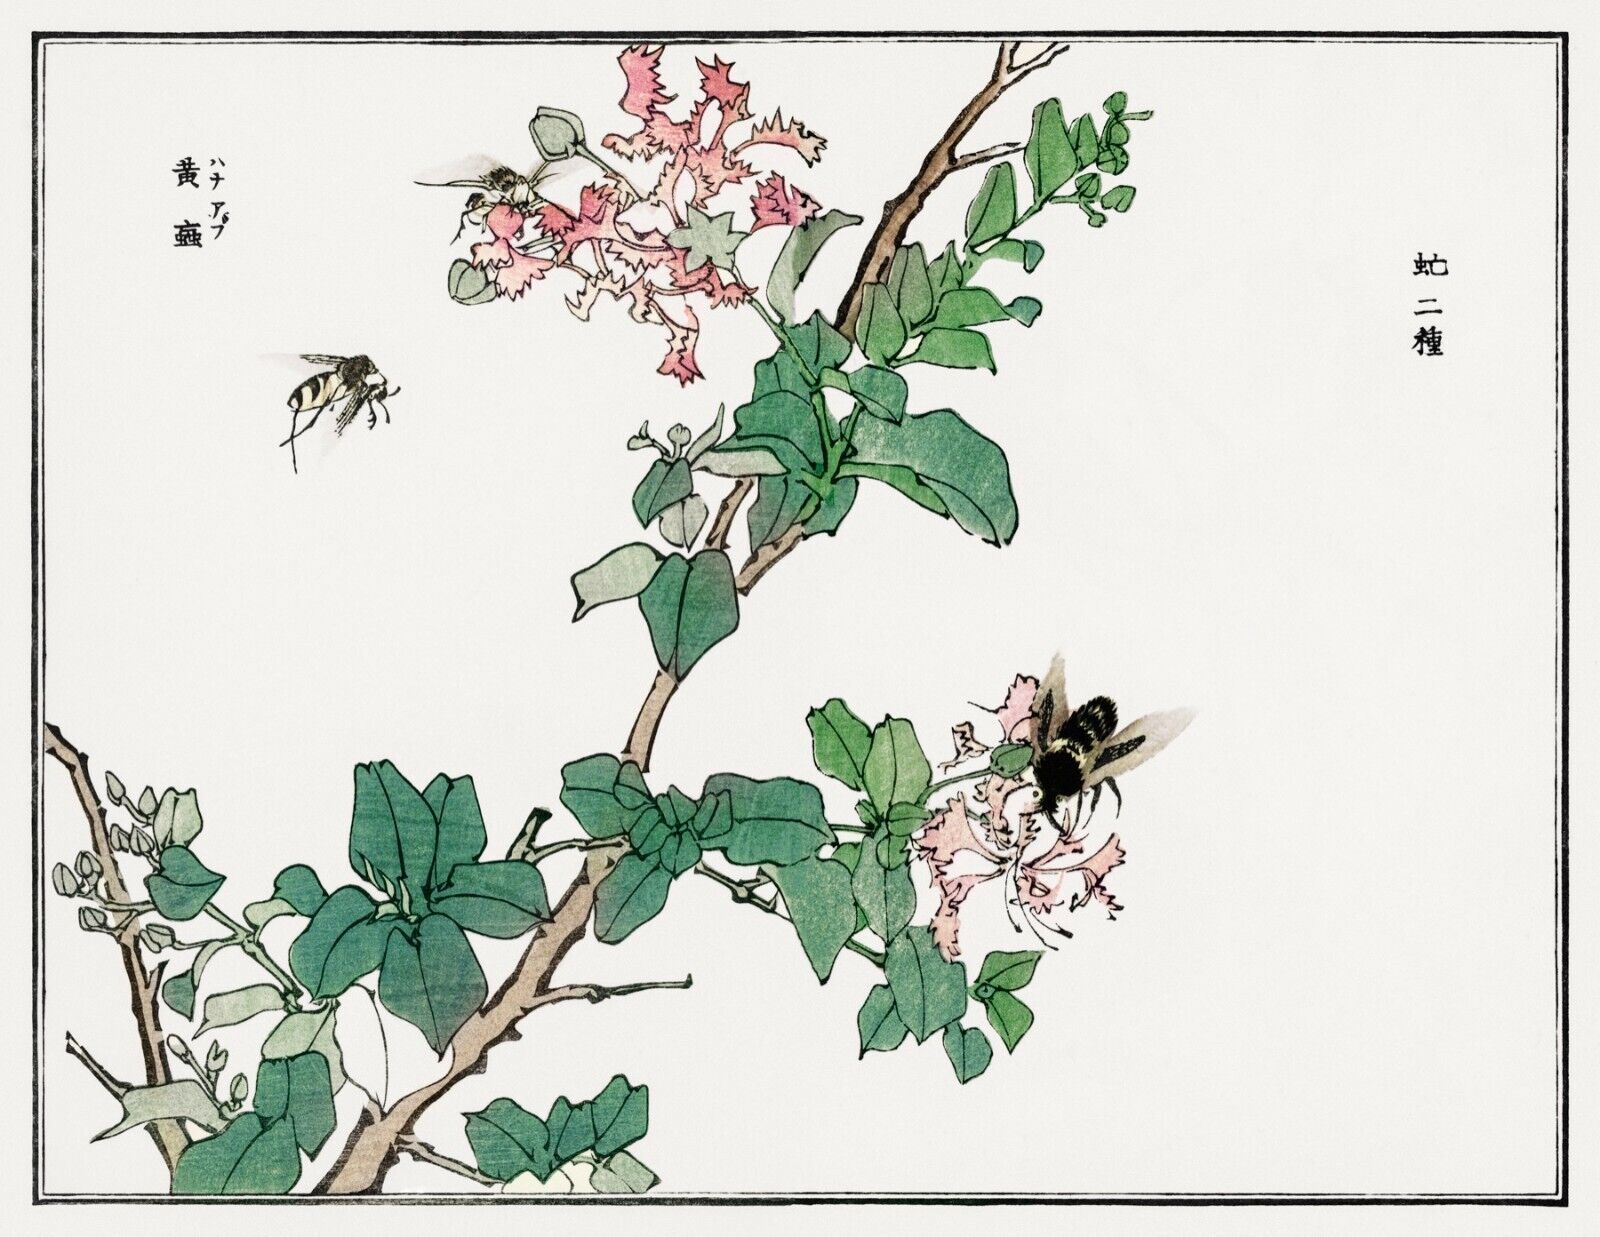 10062.Decor Poster.Room home wall.1910 Japan print.Morimoto Toko art.Bees